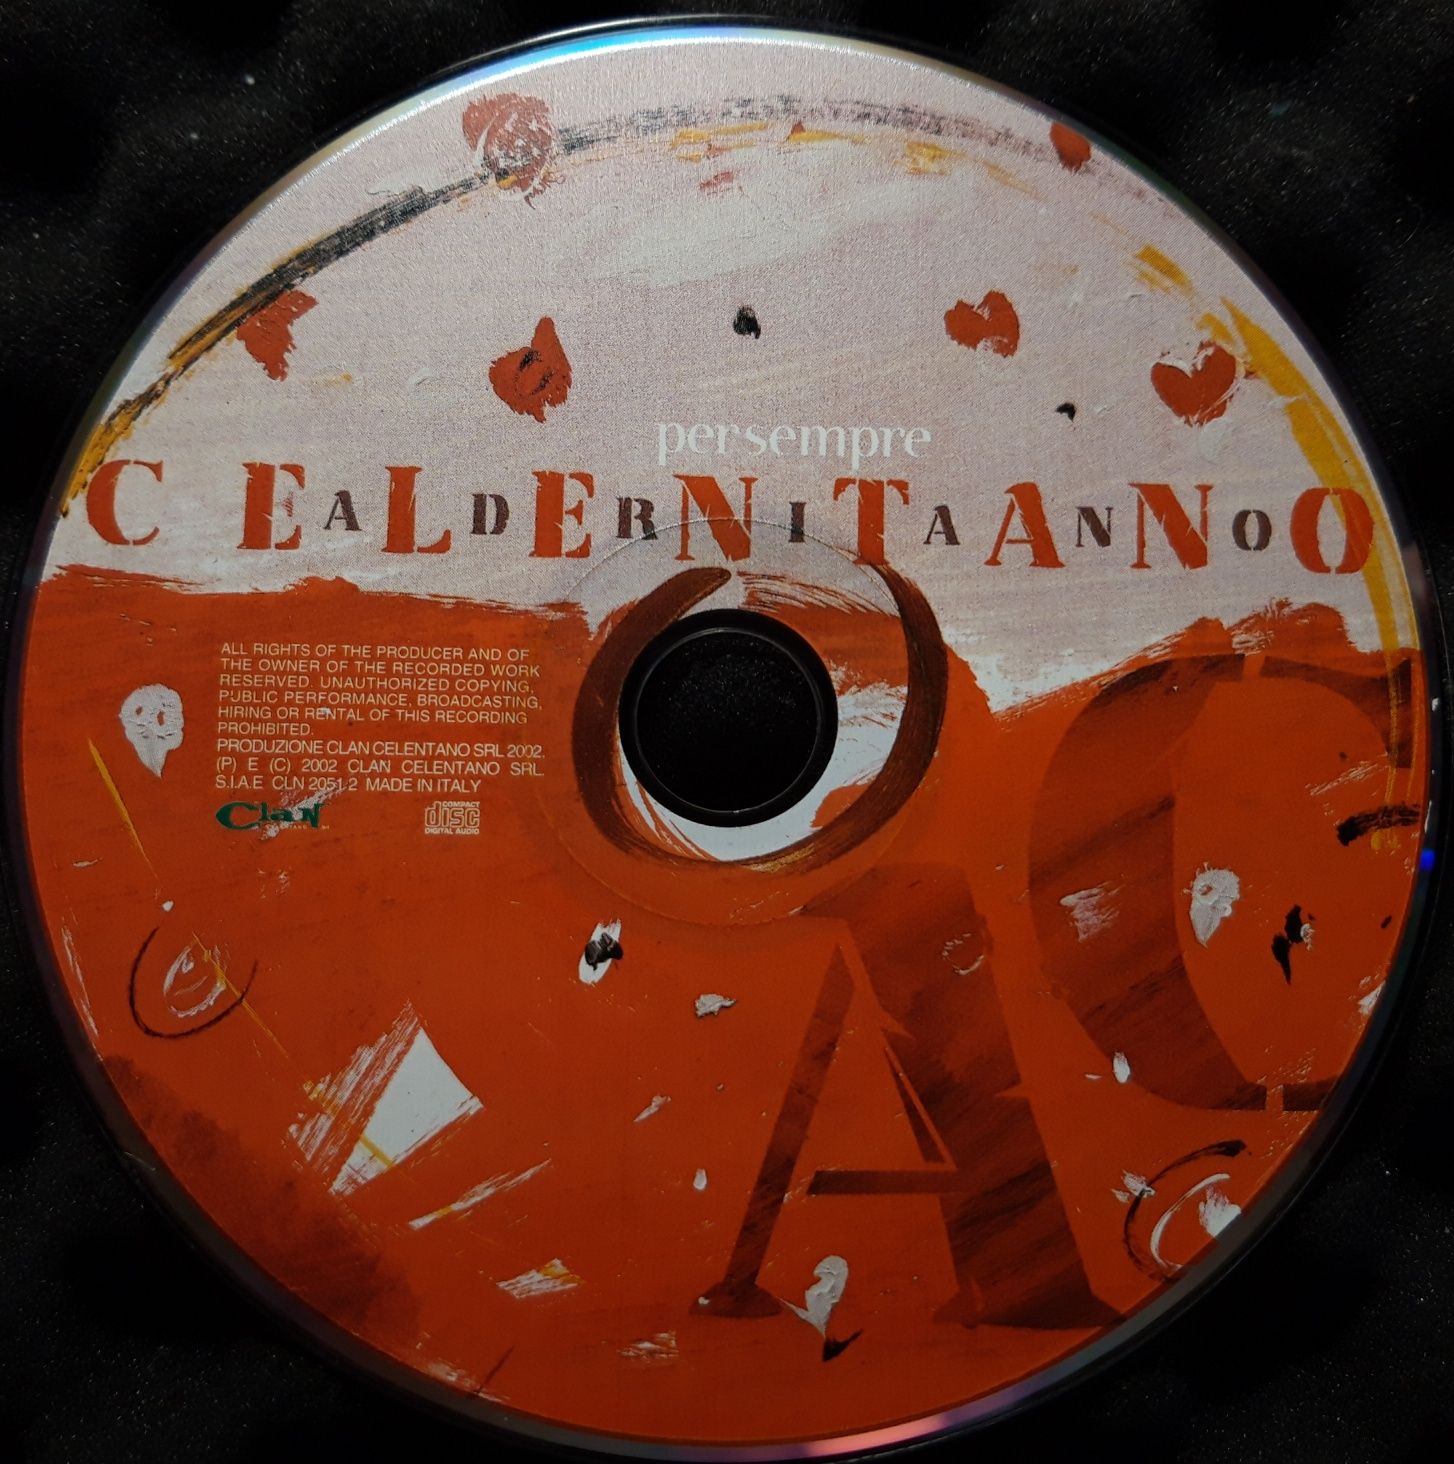 Celentano - Persempre (CD, 2002)